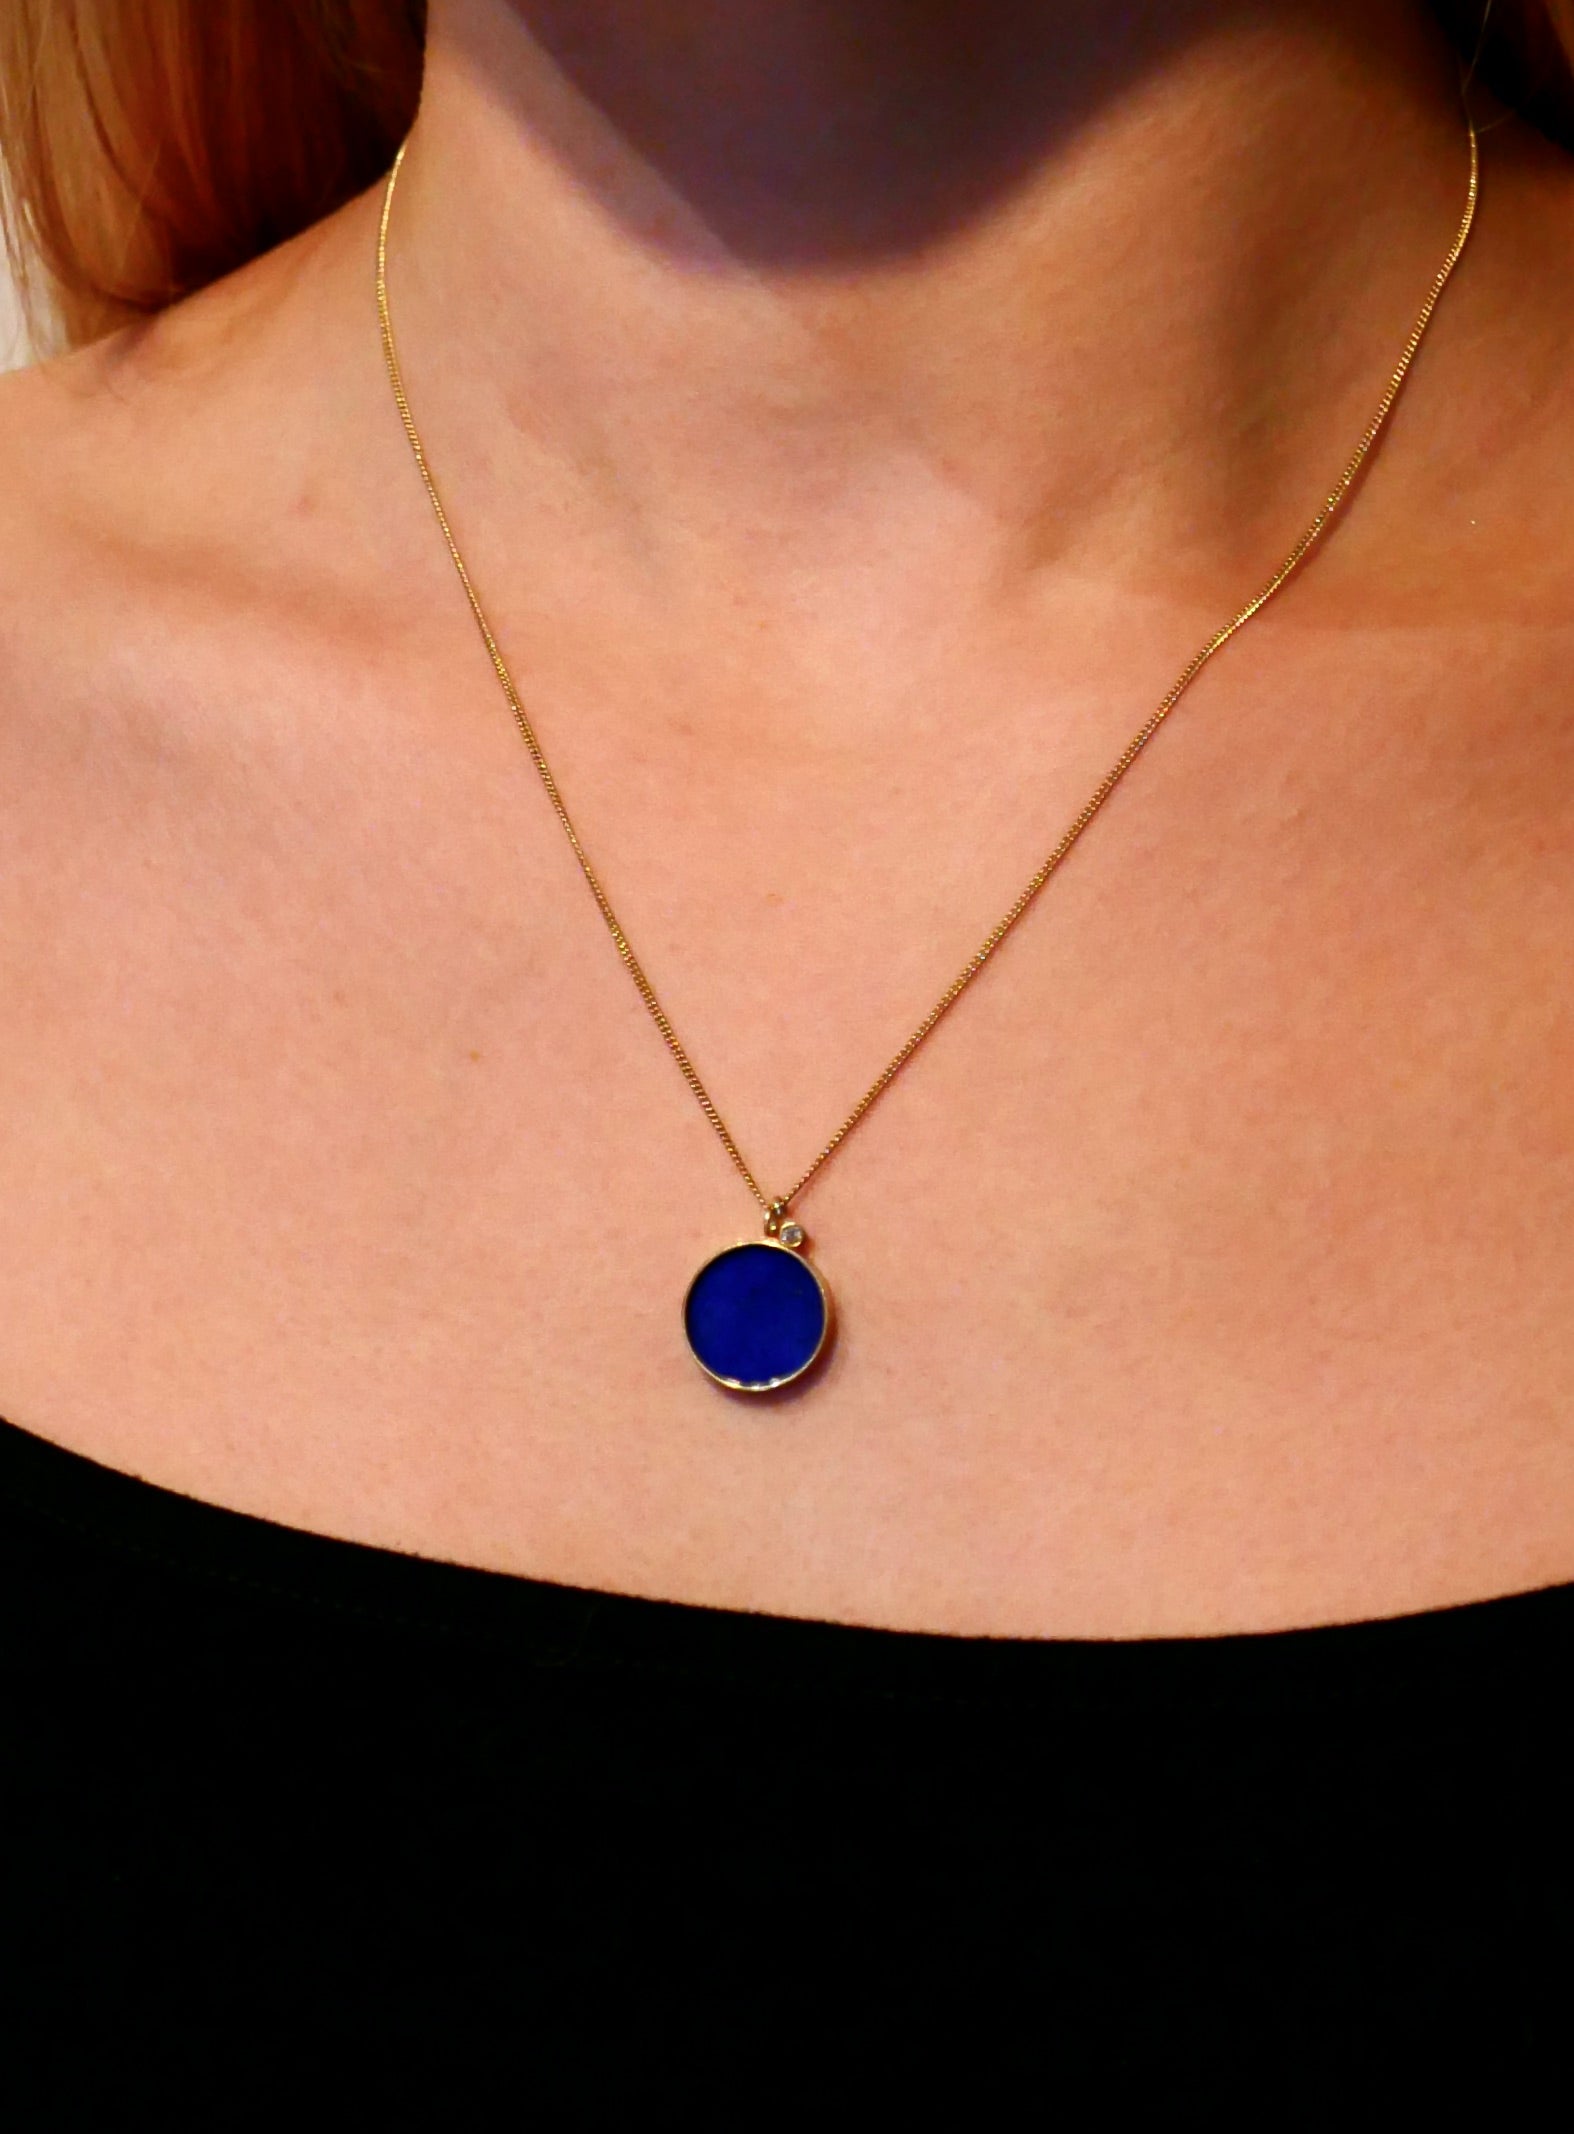 Blue lapis lazuli and gold pendant necklace on model